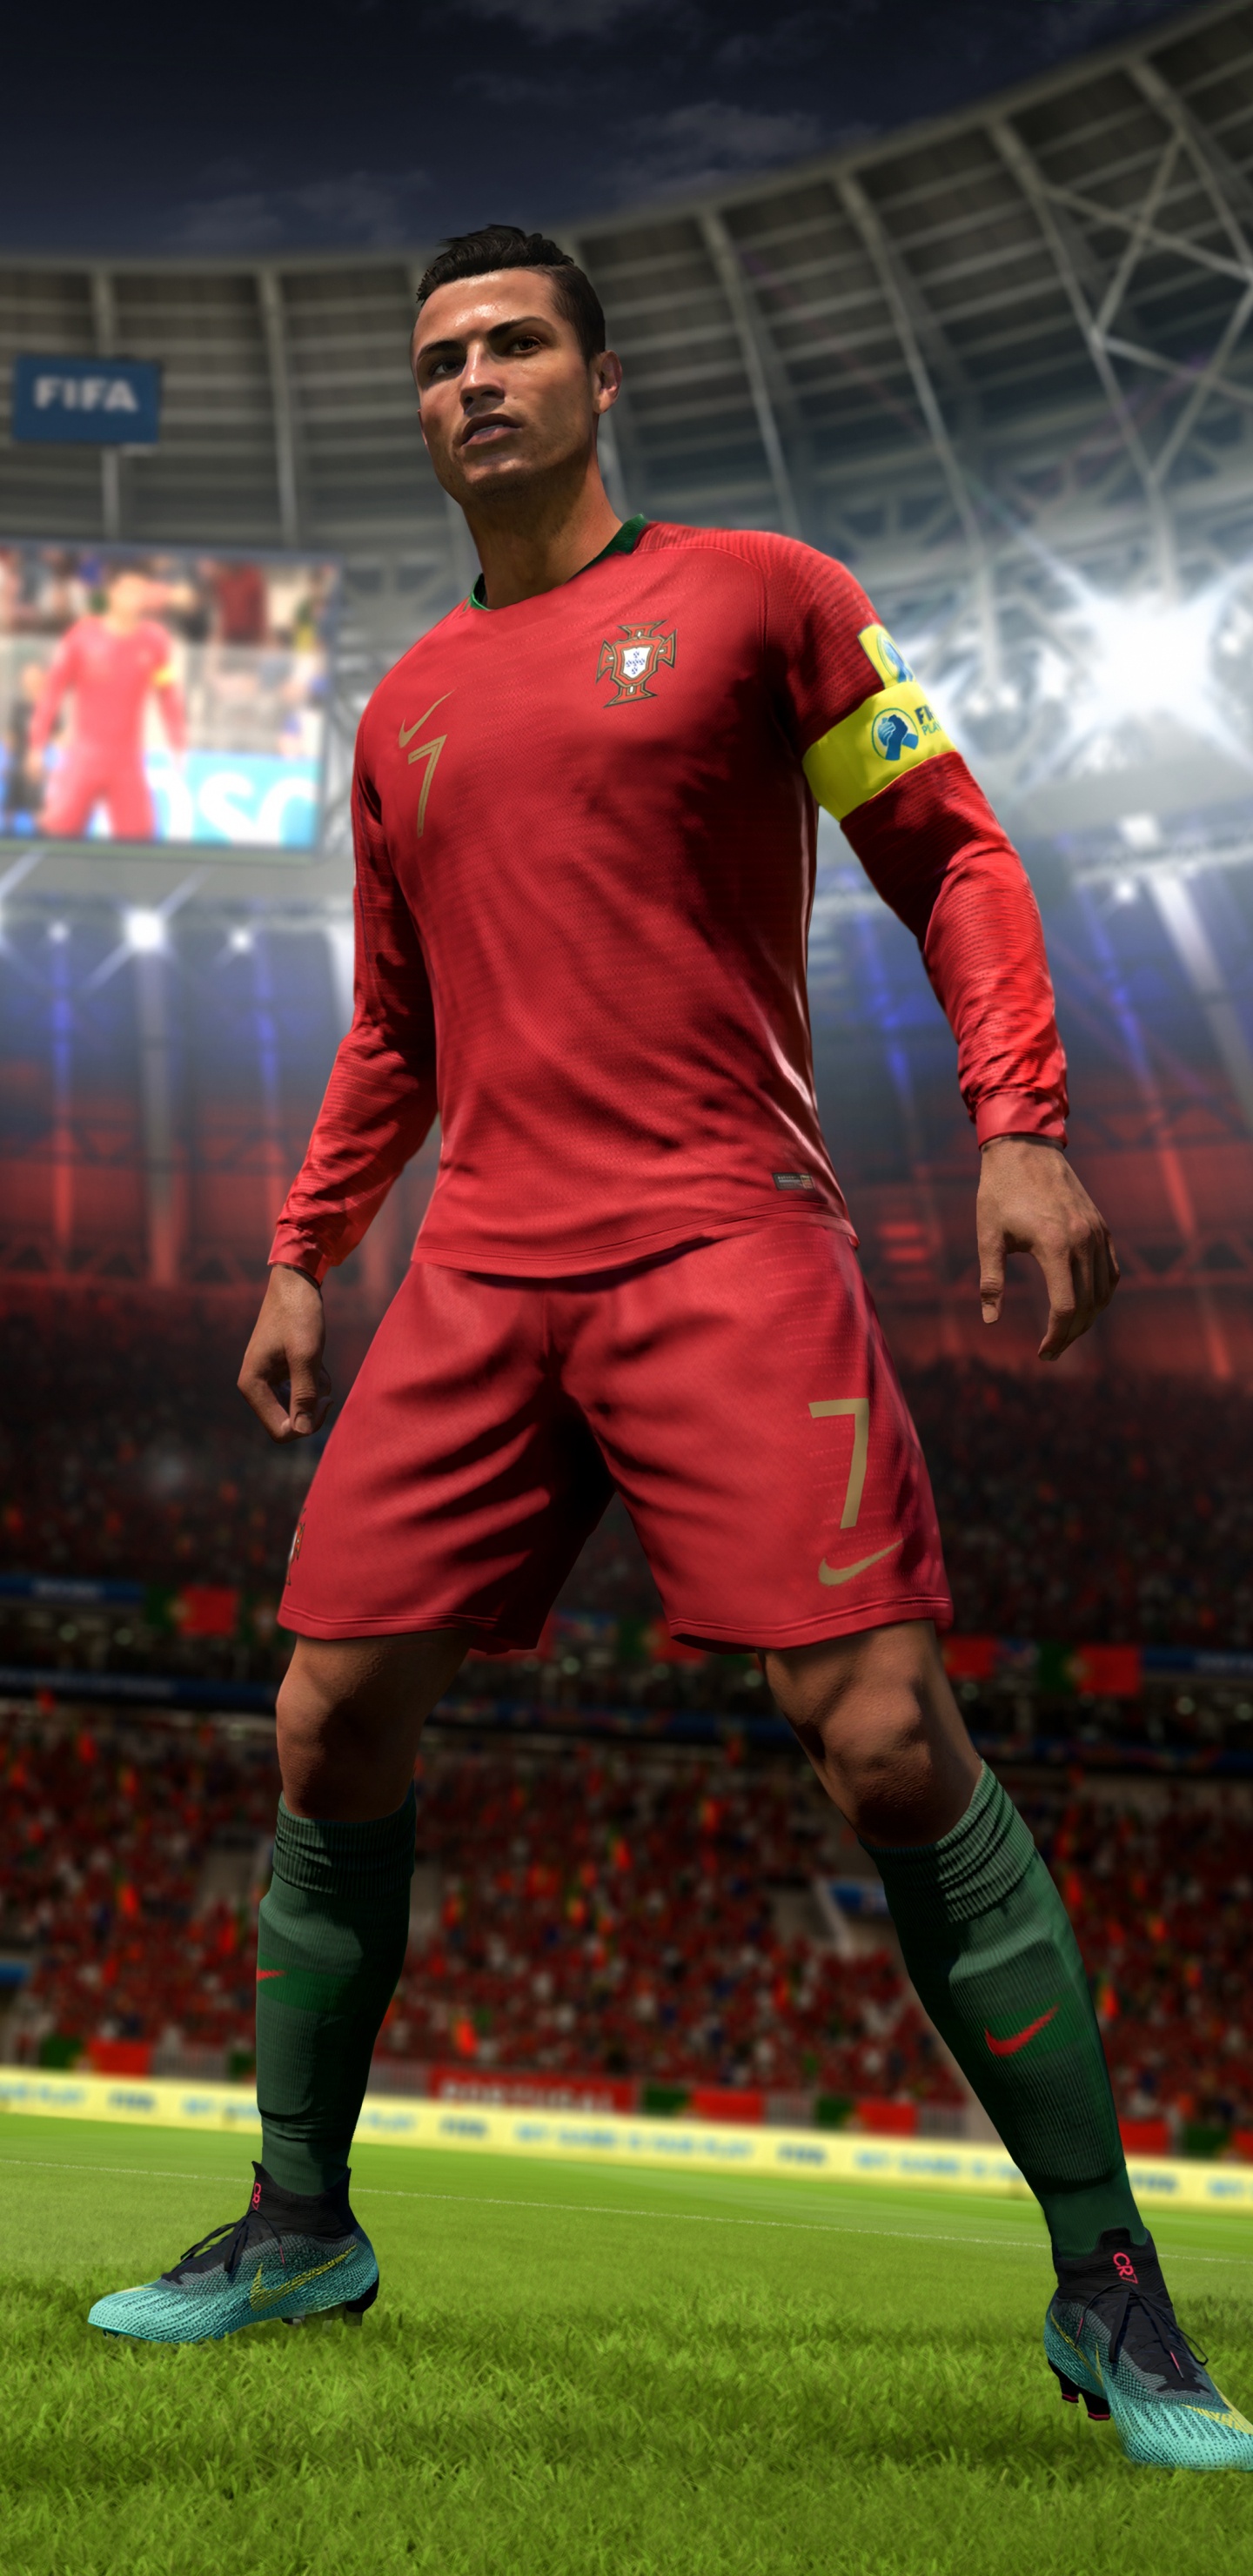 Fifa 18, 2018 la Coupe du Monde, ea Sports, Electronic Arts, Playstation 4. Wallpaper in 1440x2960 Resolution